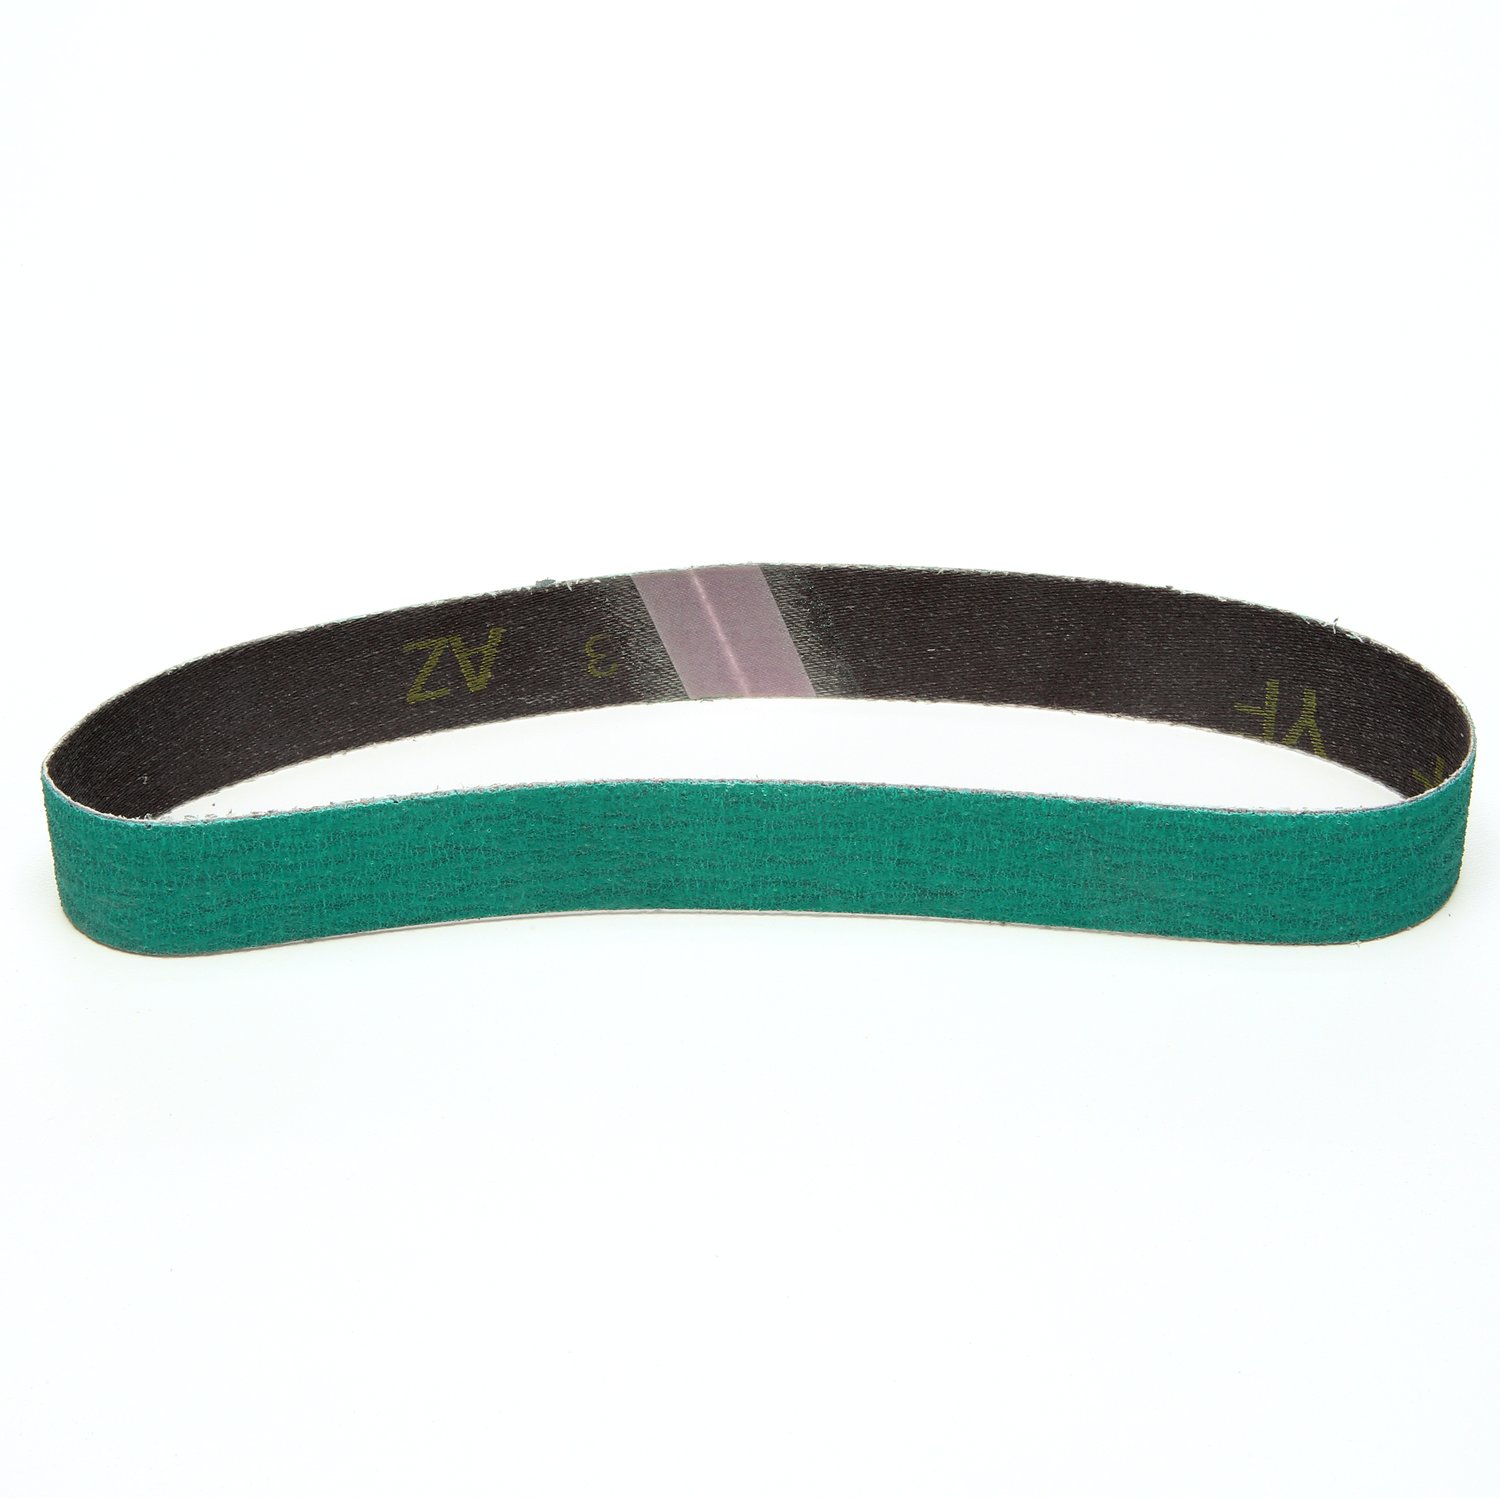 7010515632 - 3M Cloth Belt 577F, 150 YF-weight, 1-1/2 in x 60 in, Film-lok,
Single-flex